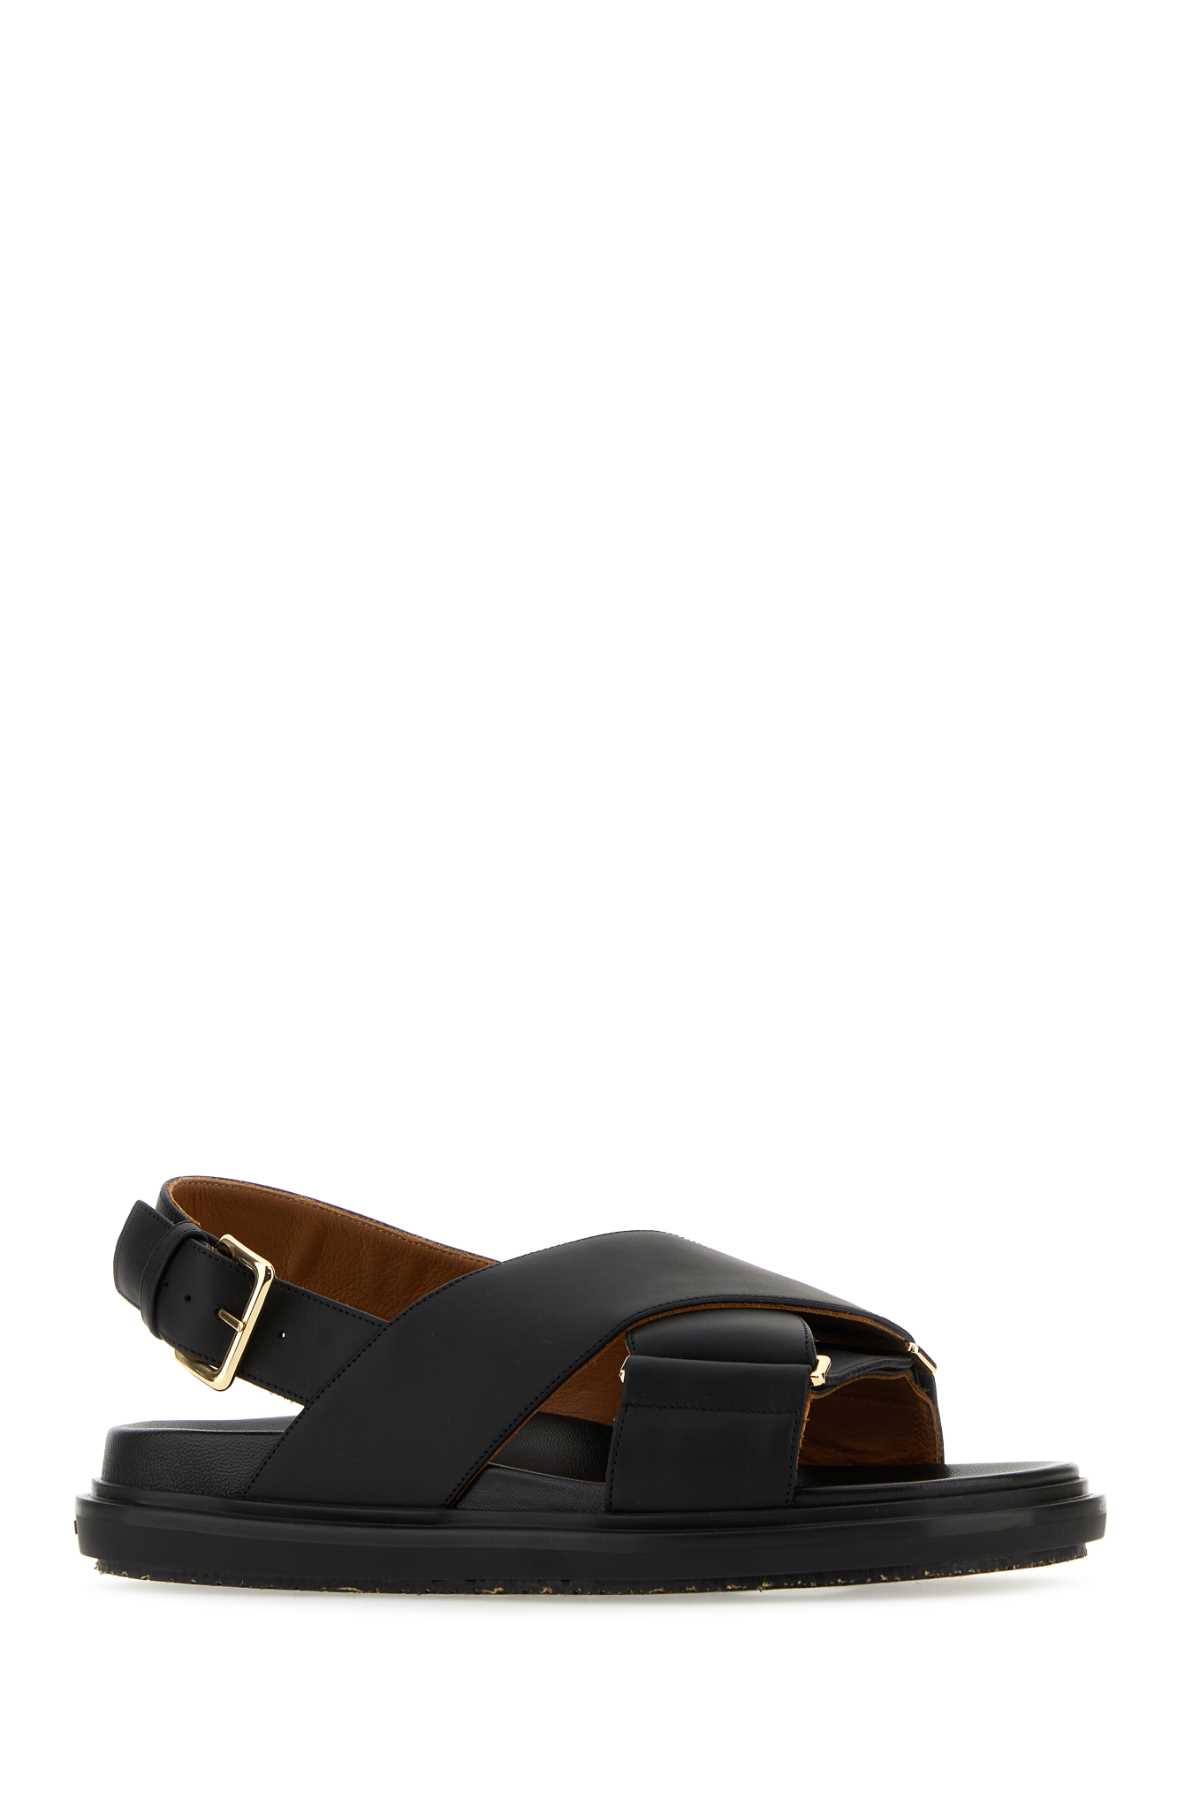 Shop Marni Black Leather Fussbett Sandals